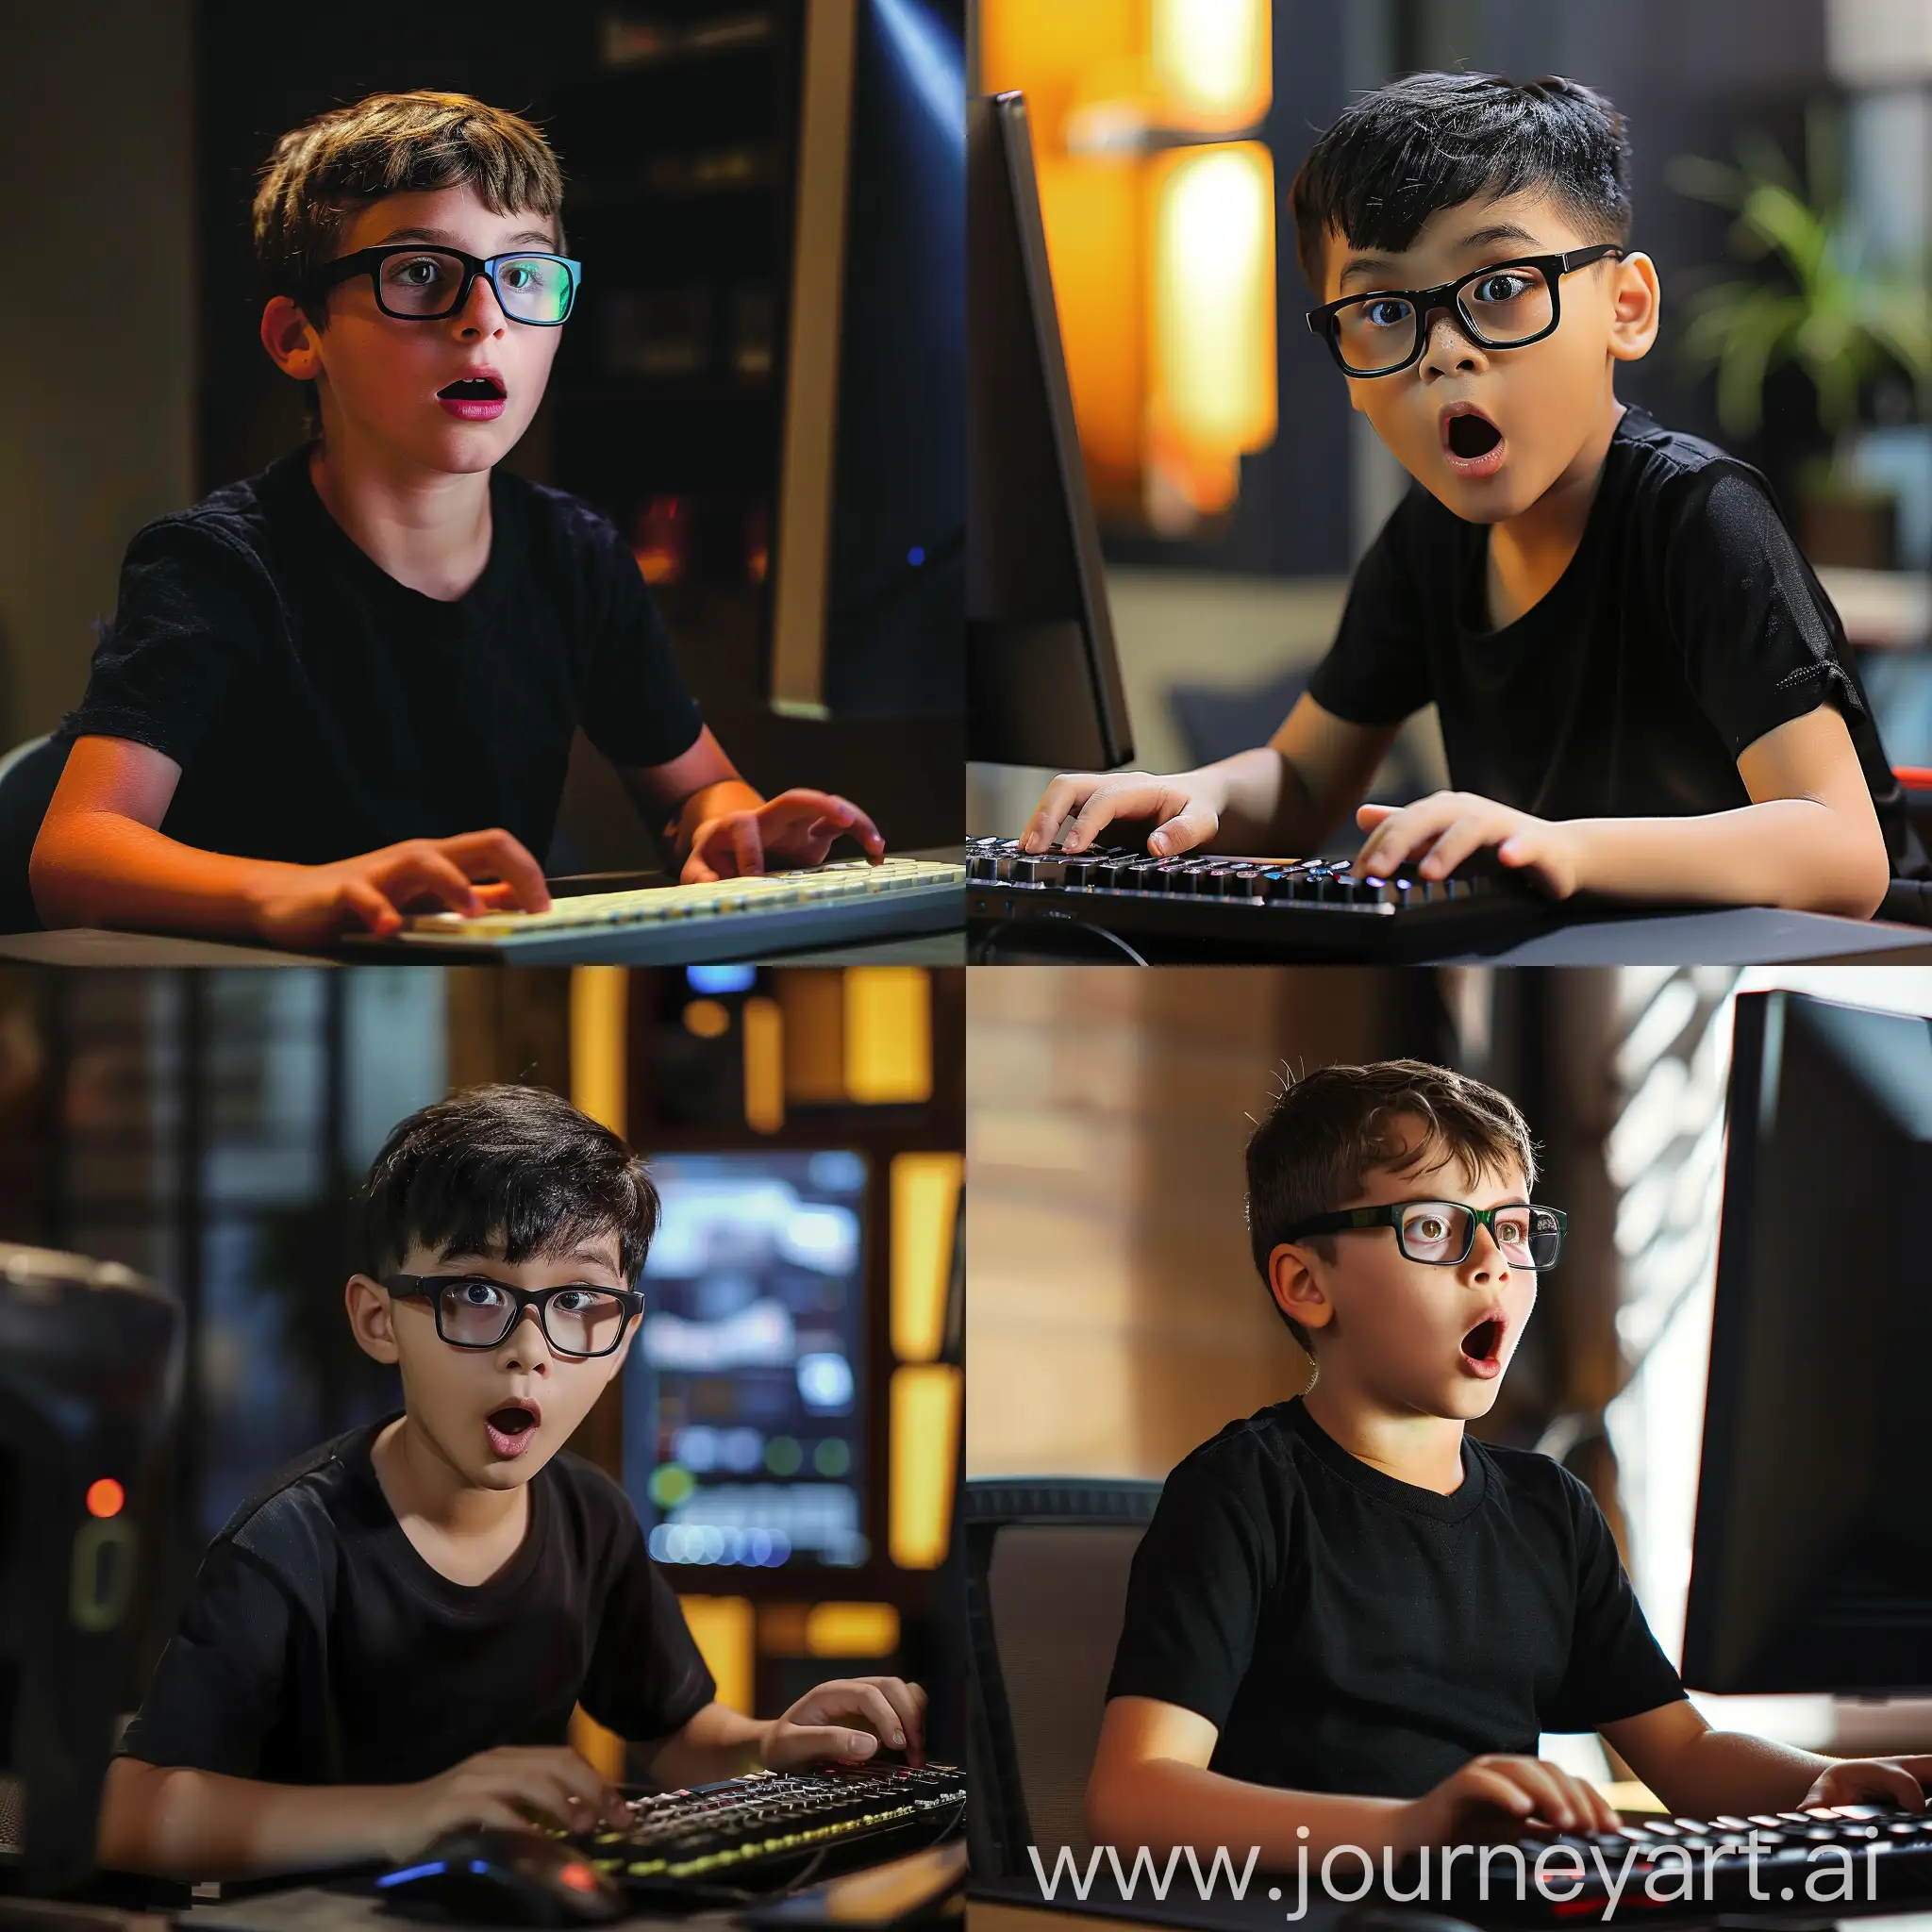 Surprised-Boy-in-Black-Shirt-Typing-on-Computer-Keyboard